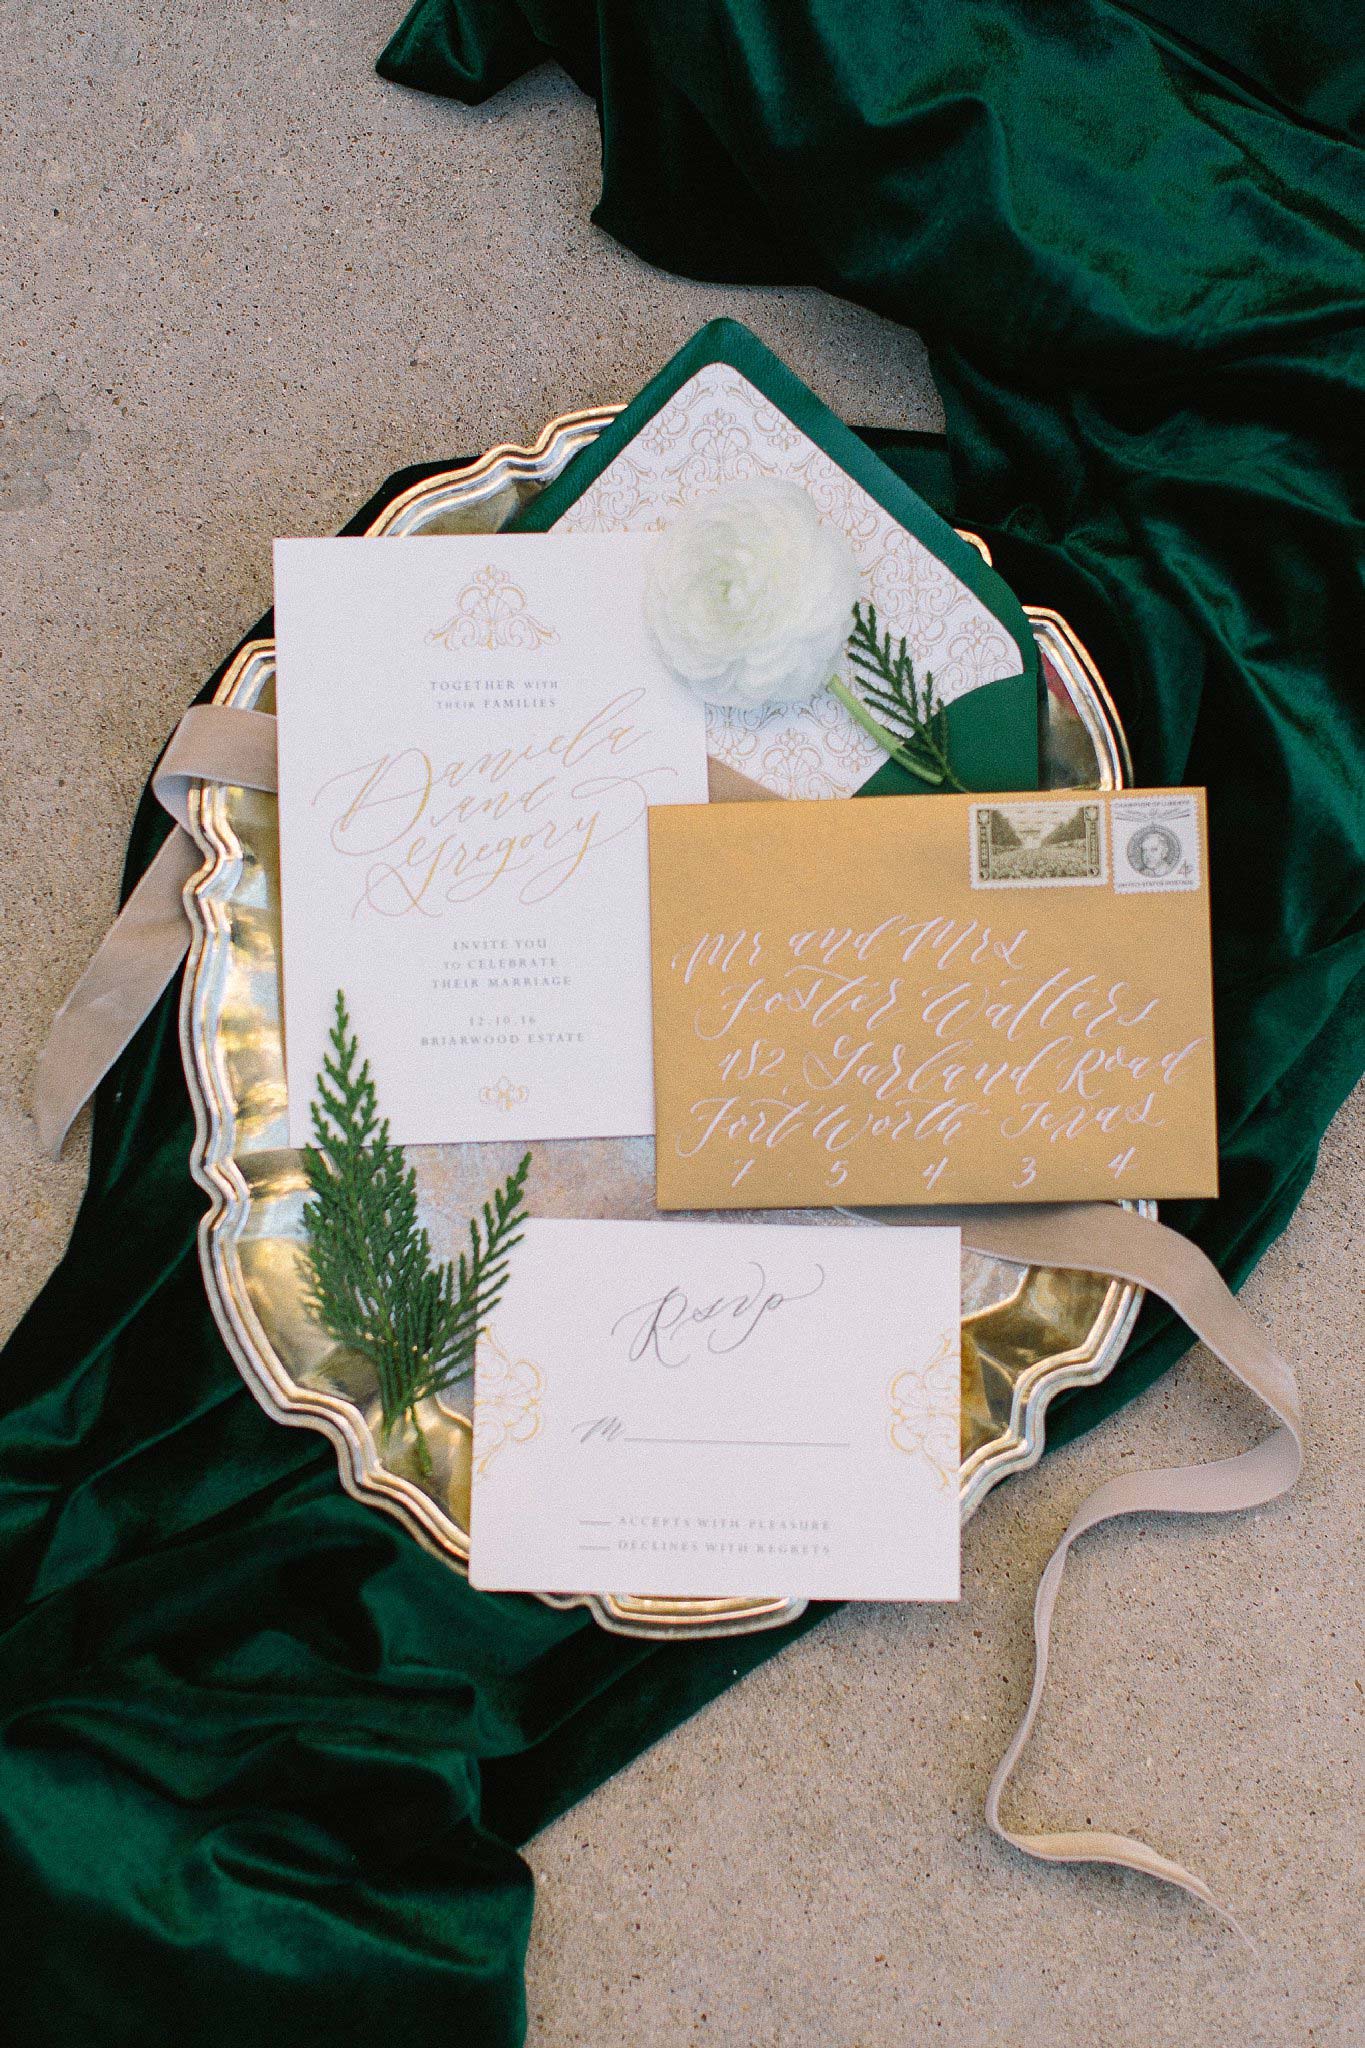 aristide mansfield wedding green and gold invitations on velvet green fabric